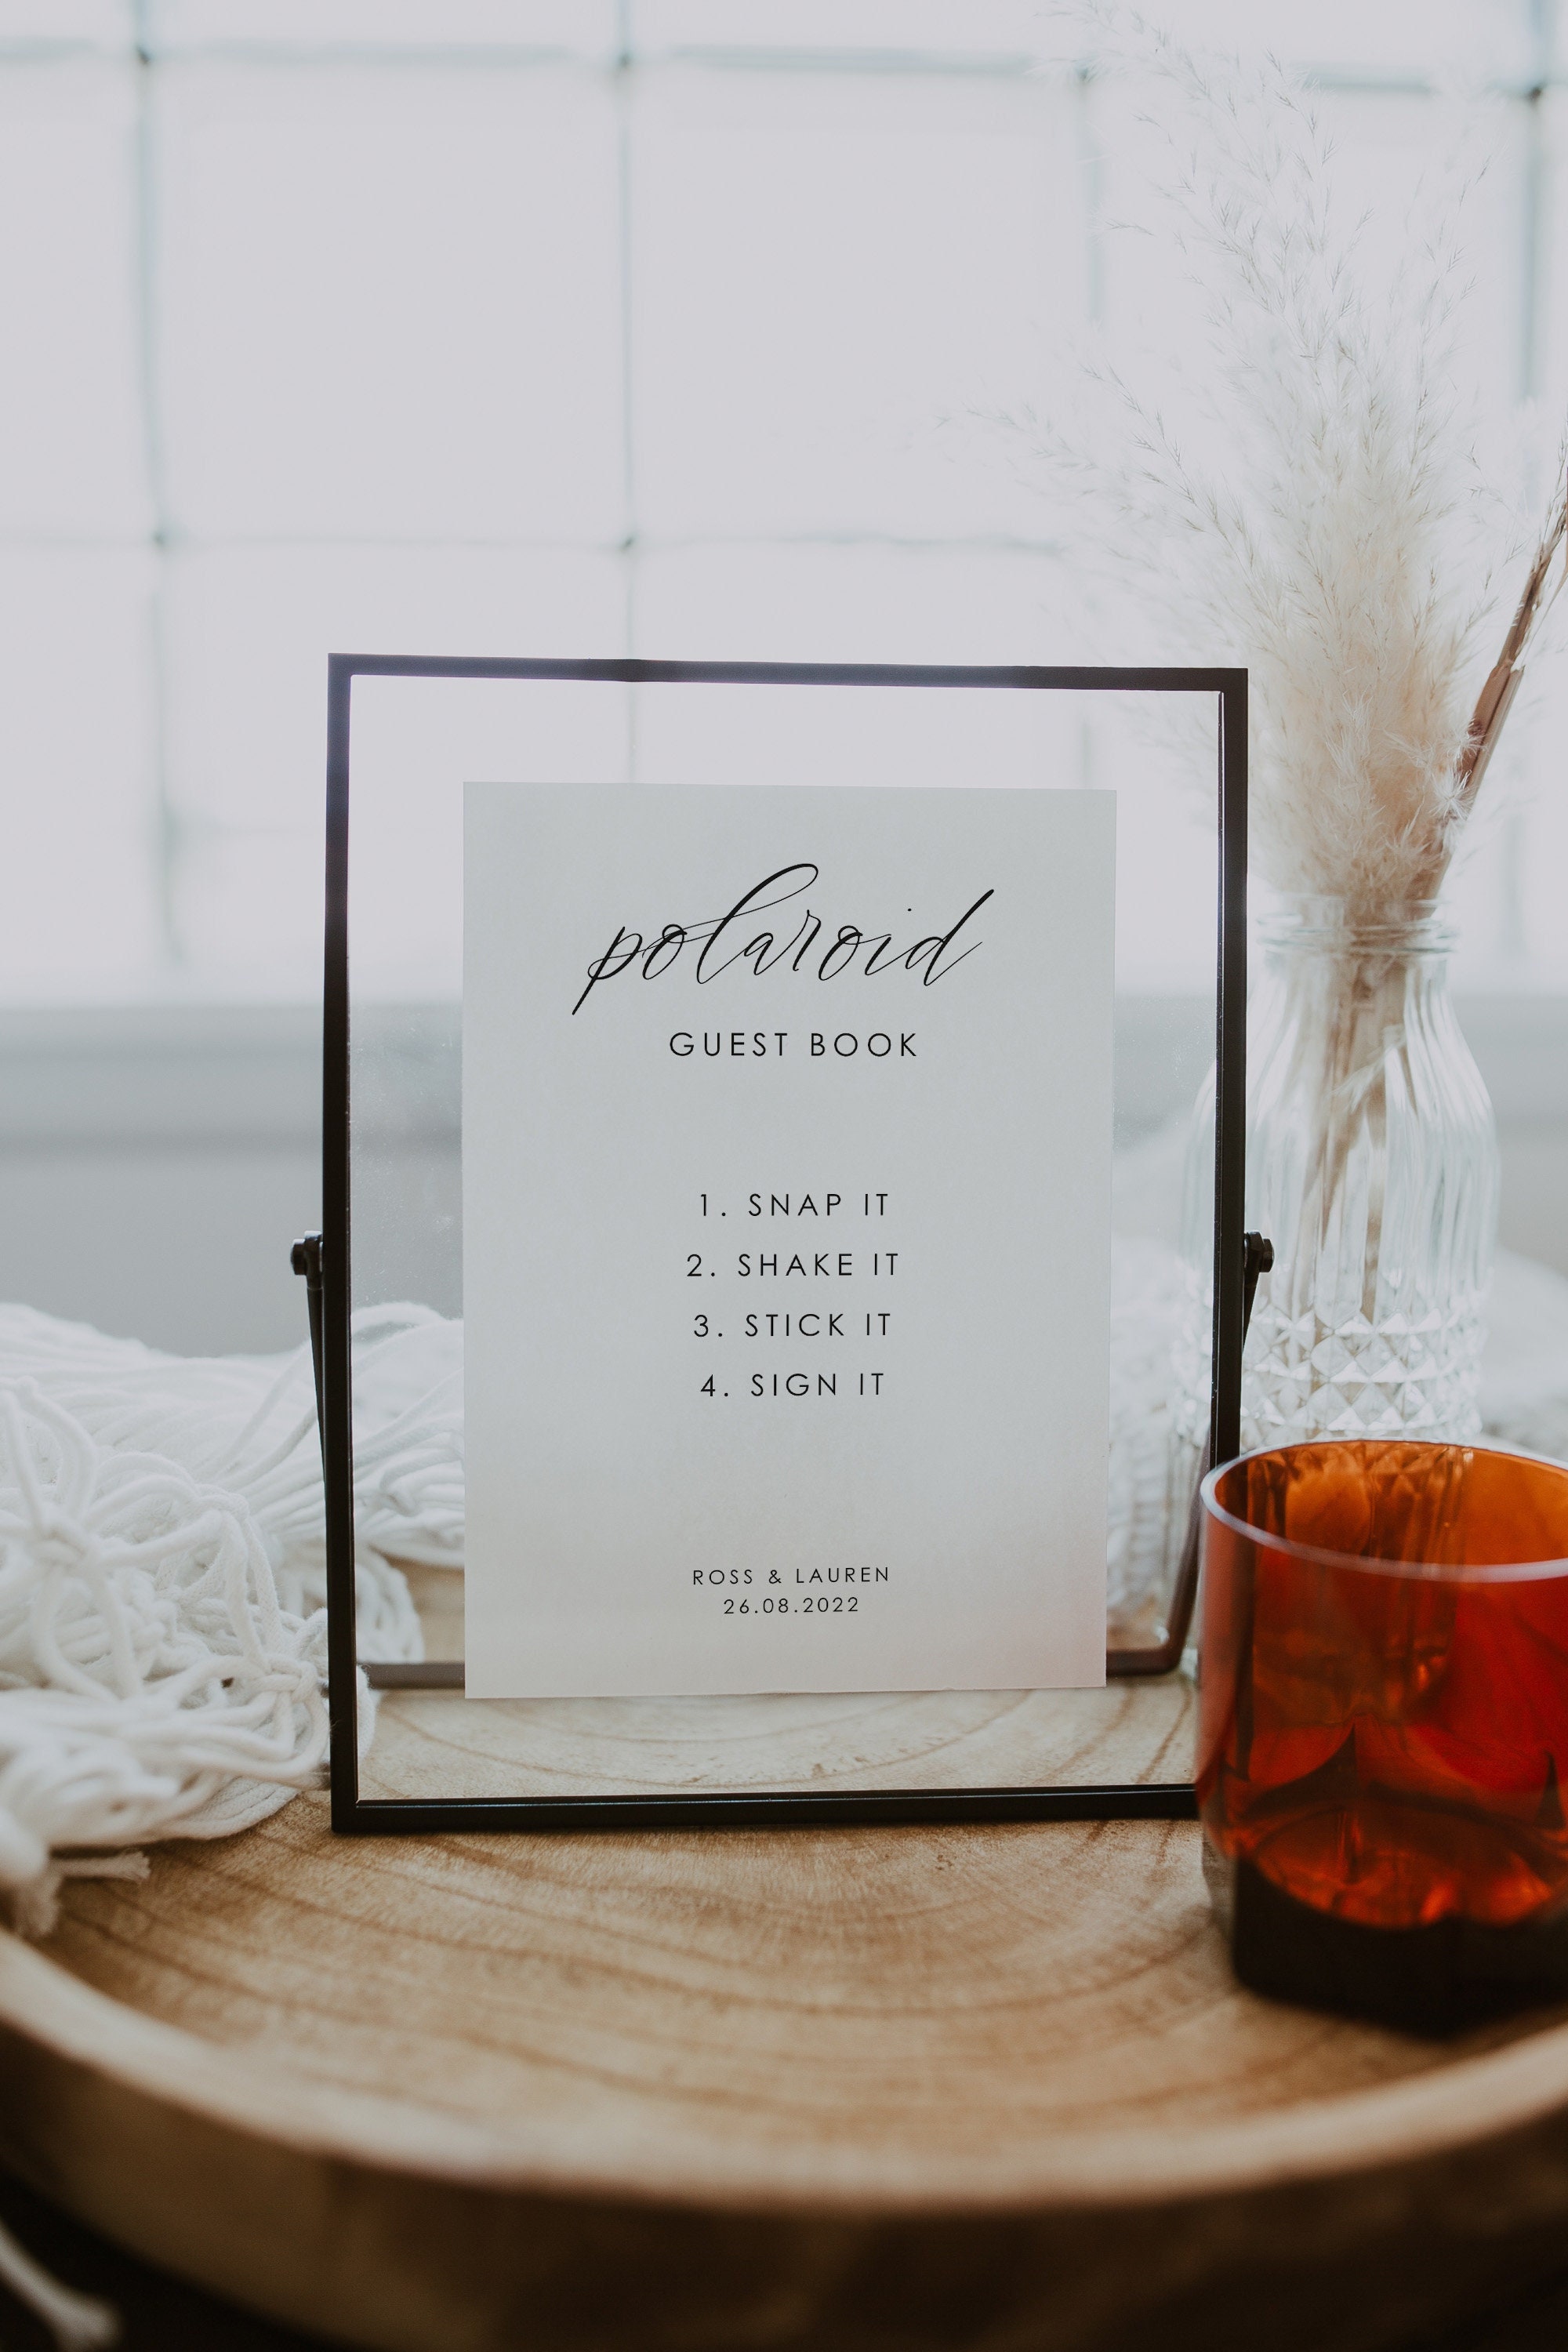 Polaroid Guest Book, Photo Guest Book Sign, Minimalist Wedding Sign lwtboho  